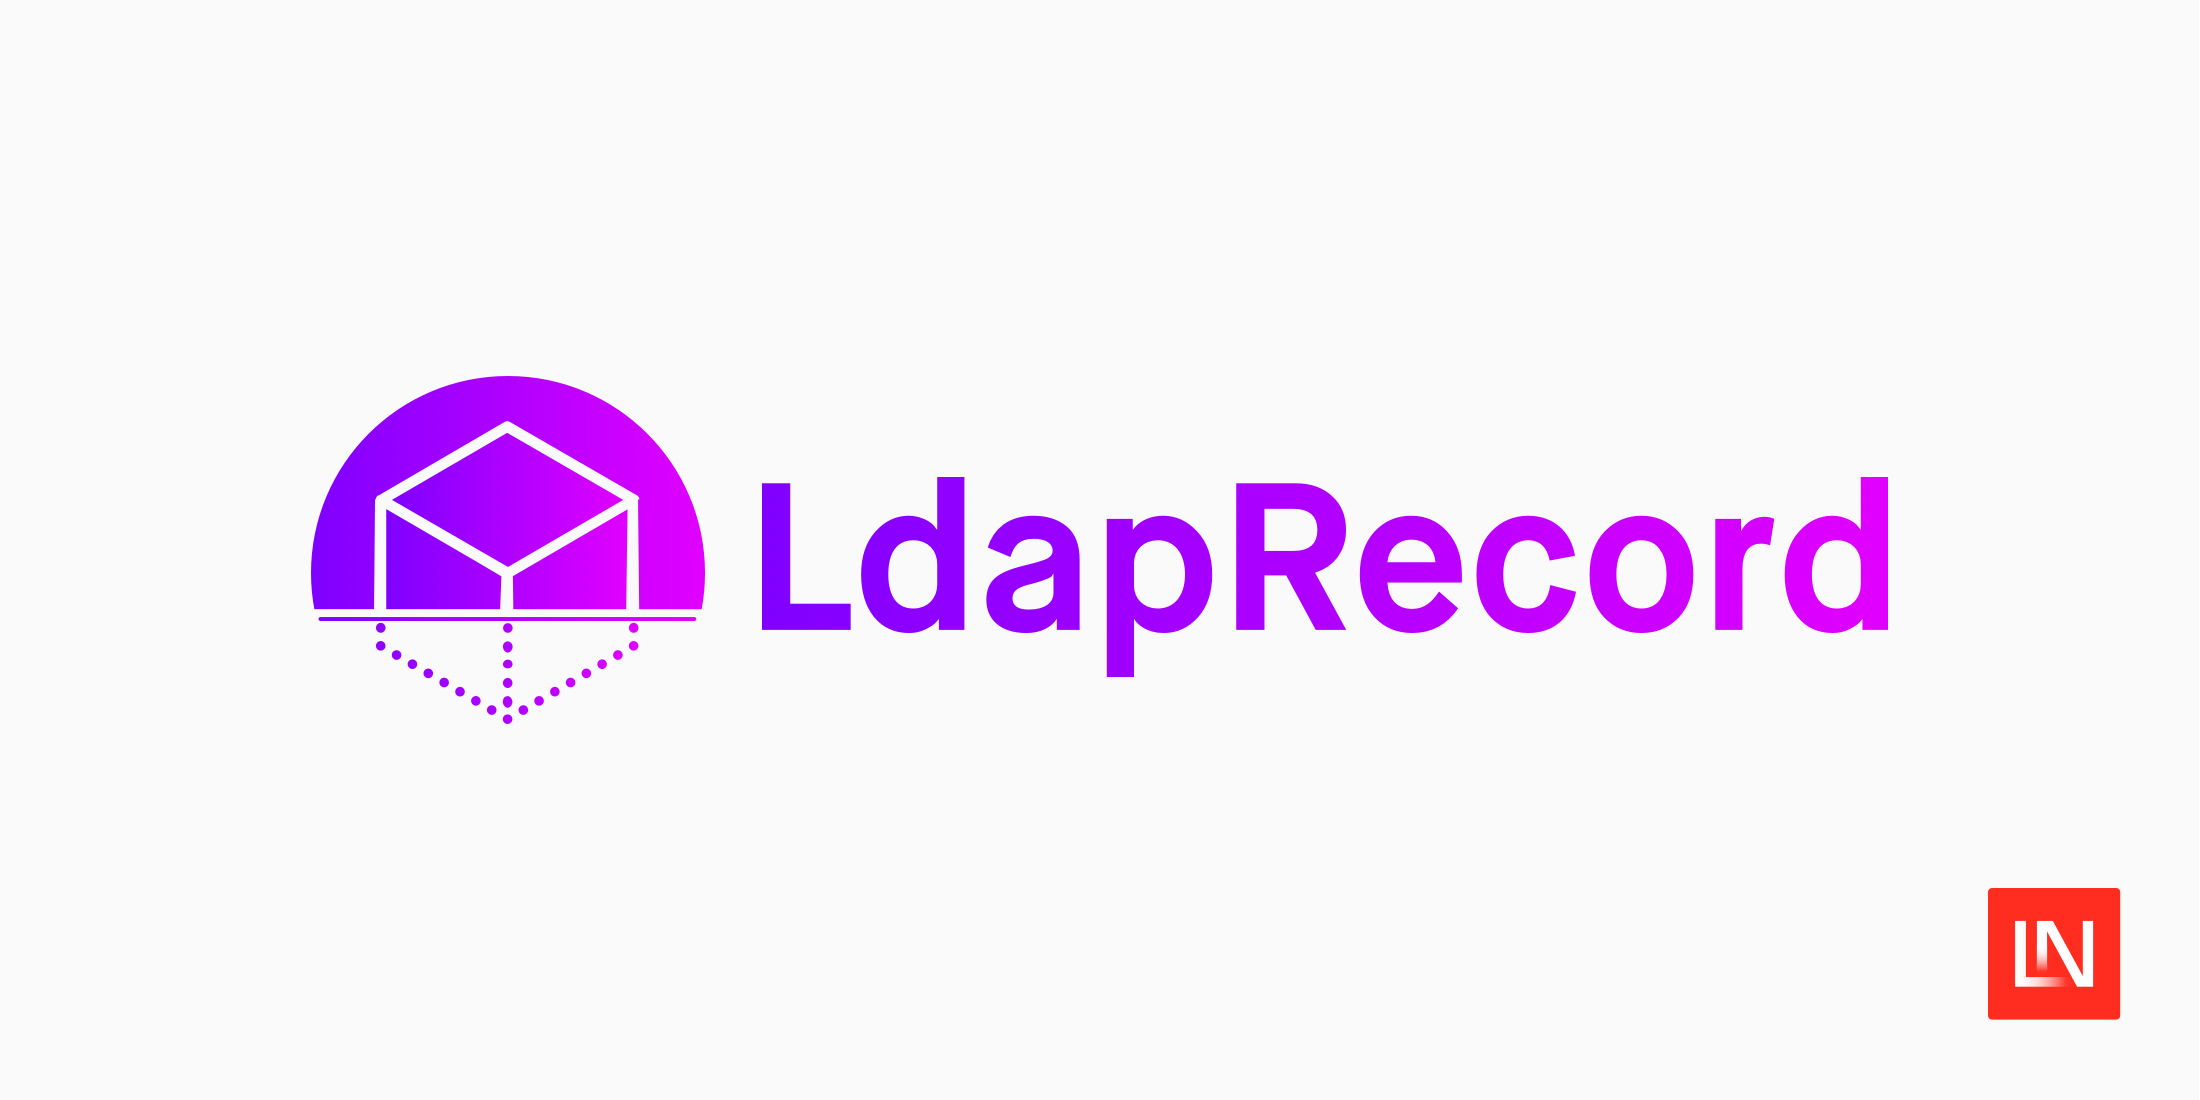 Laravel LDAP image